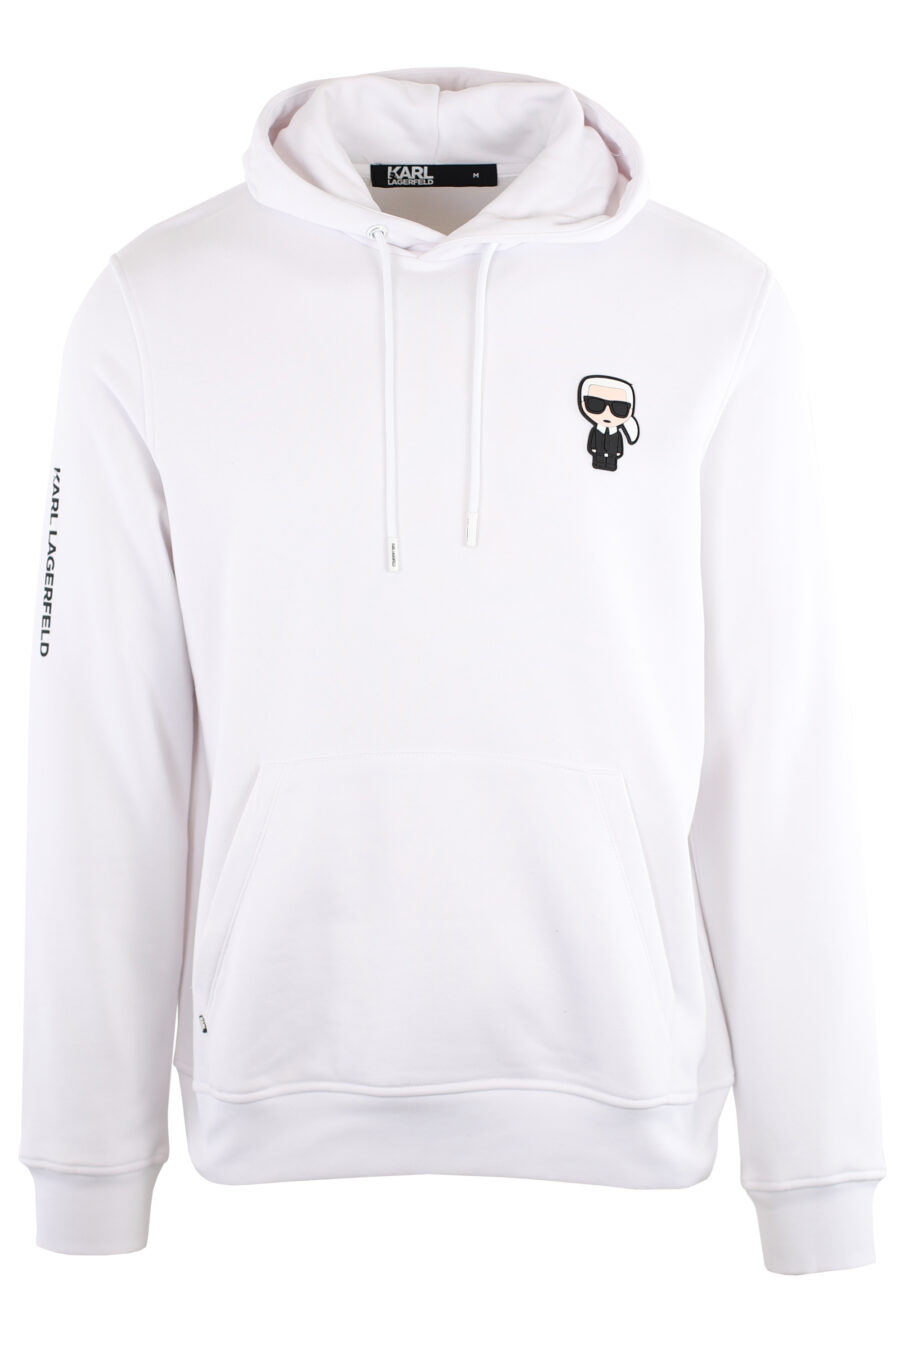 Sweatshirt branca com capuz e logótipo "ikonik" pequeno - IMG 7458